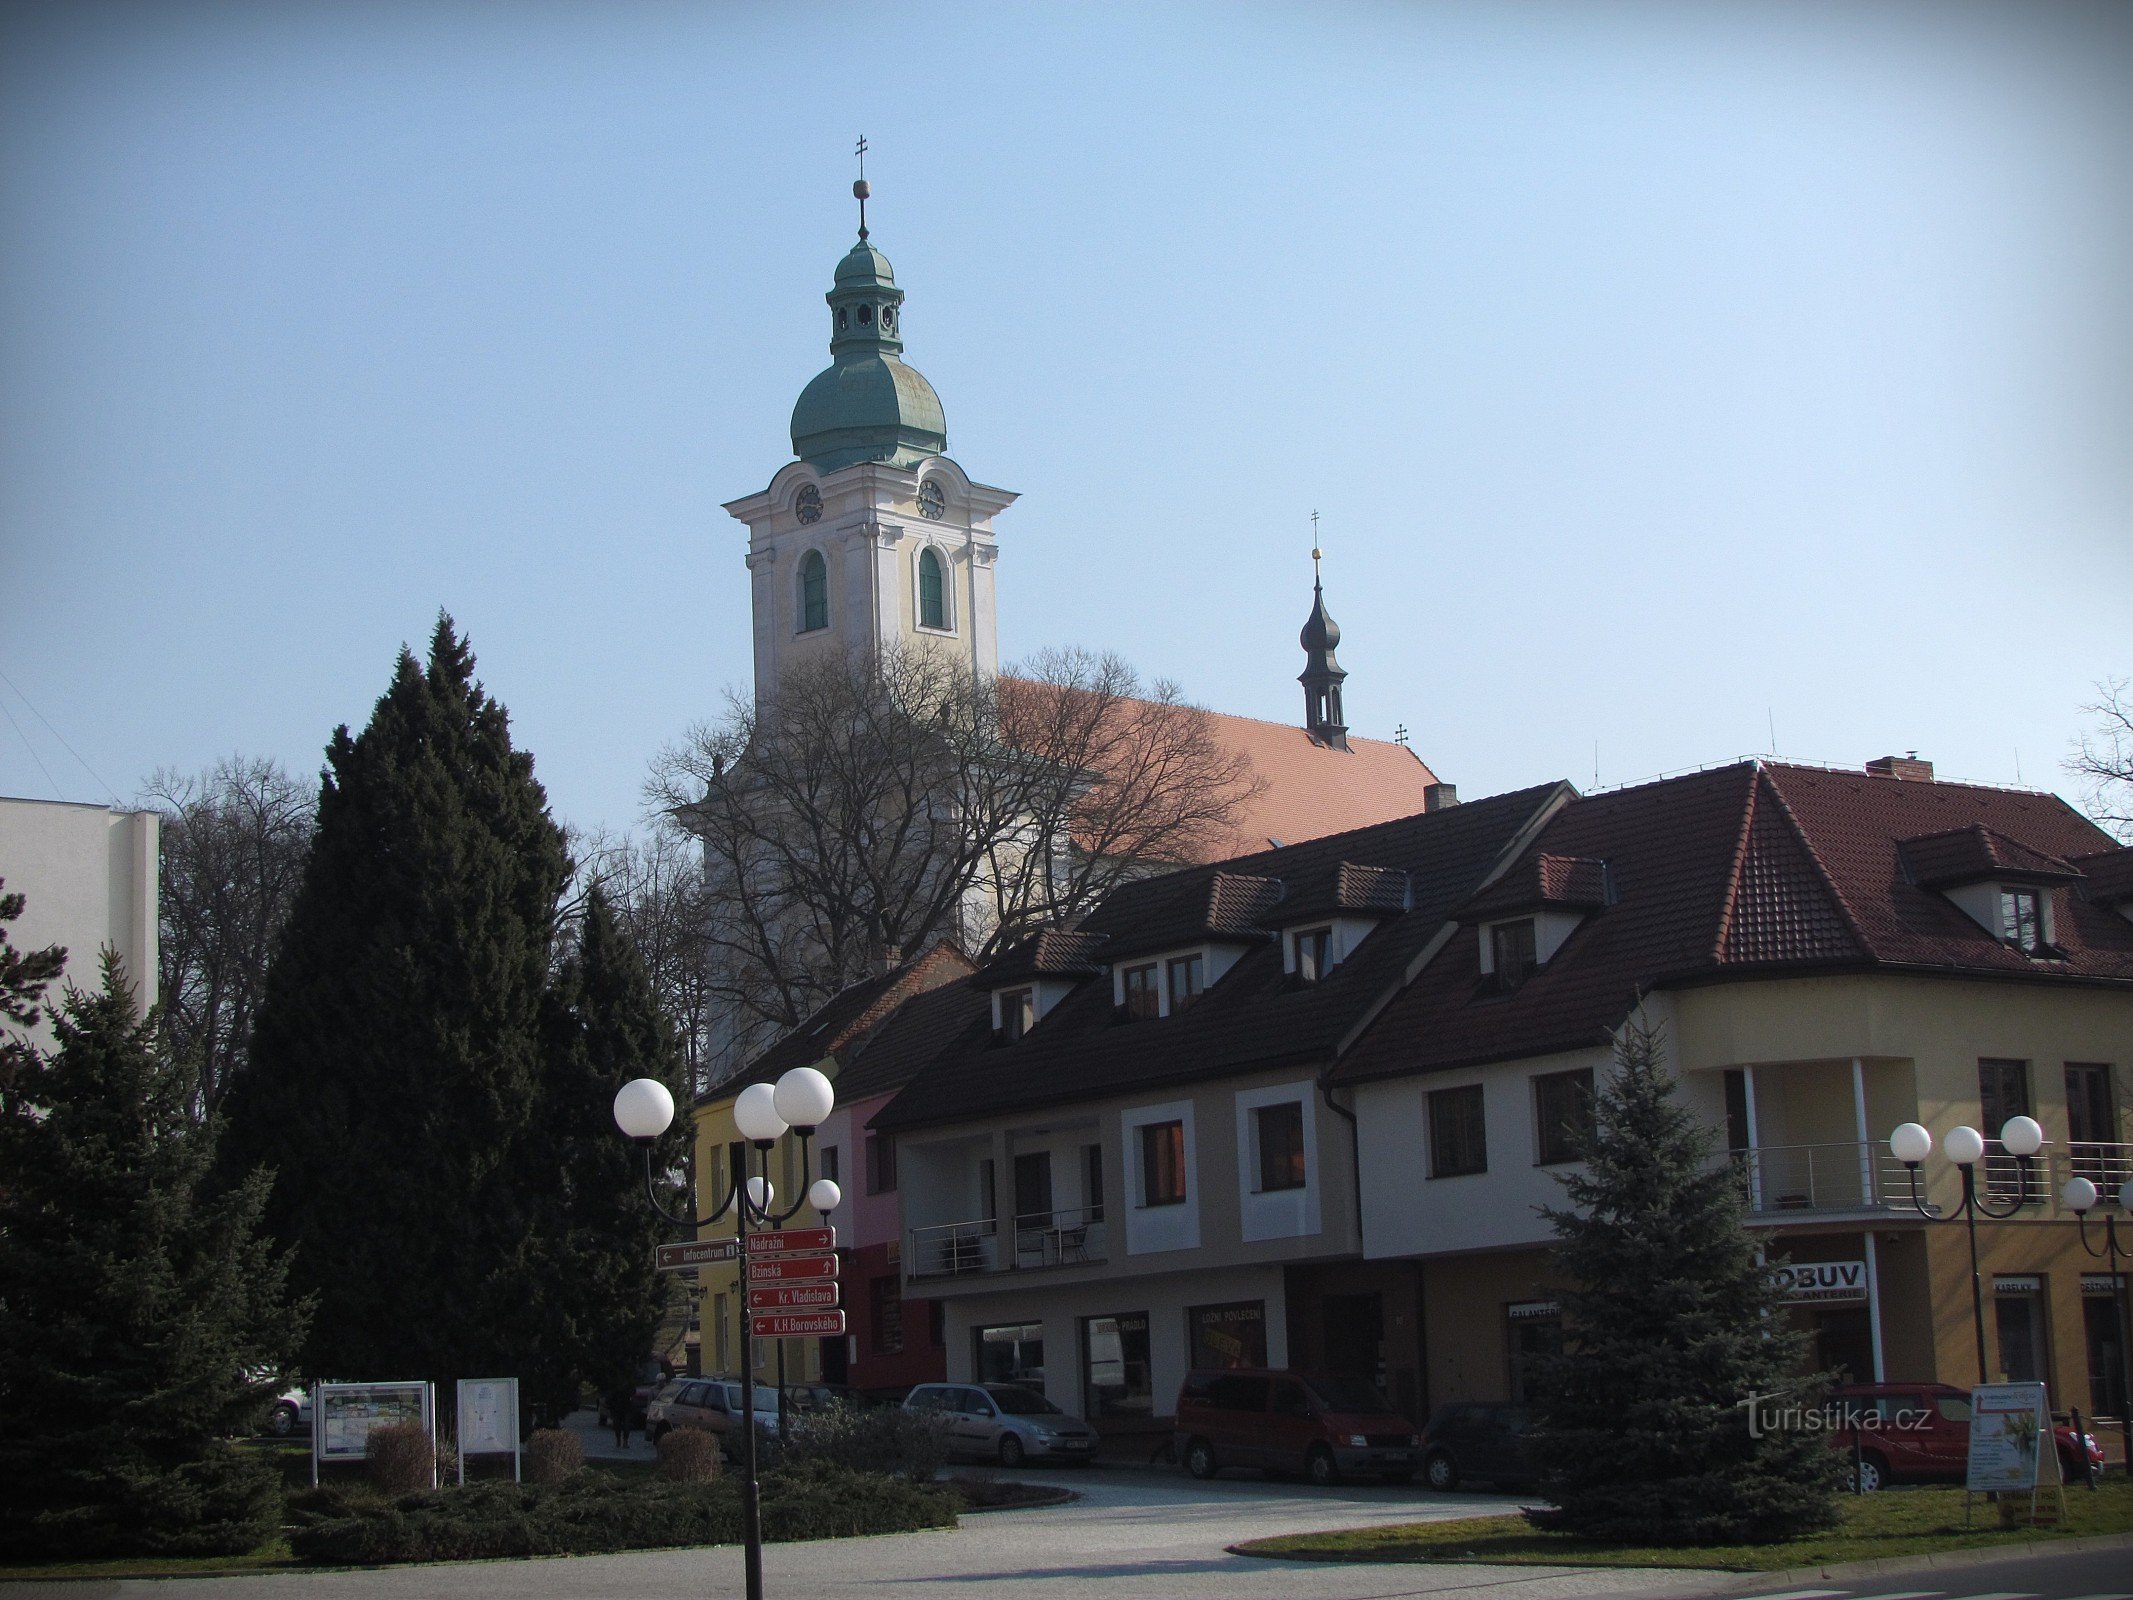 Bzenec - Johannes Döparens kyrka